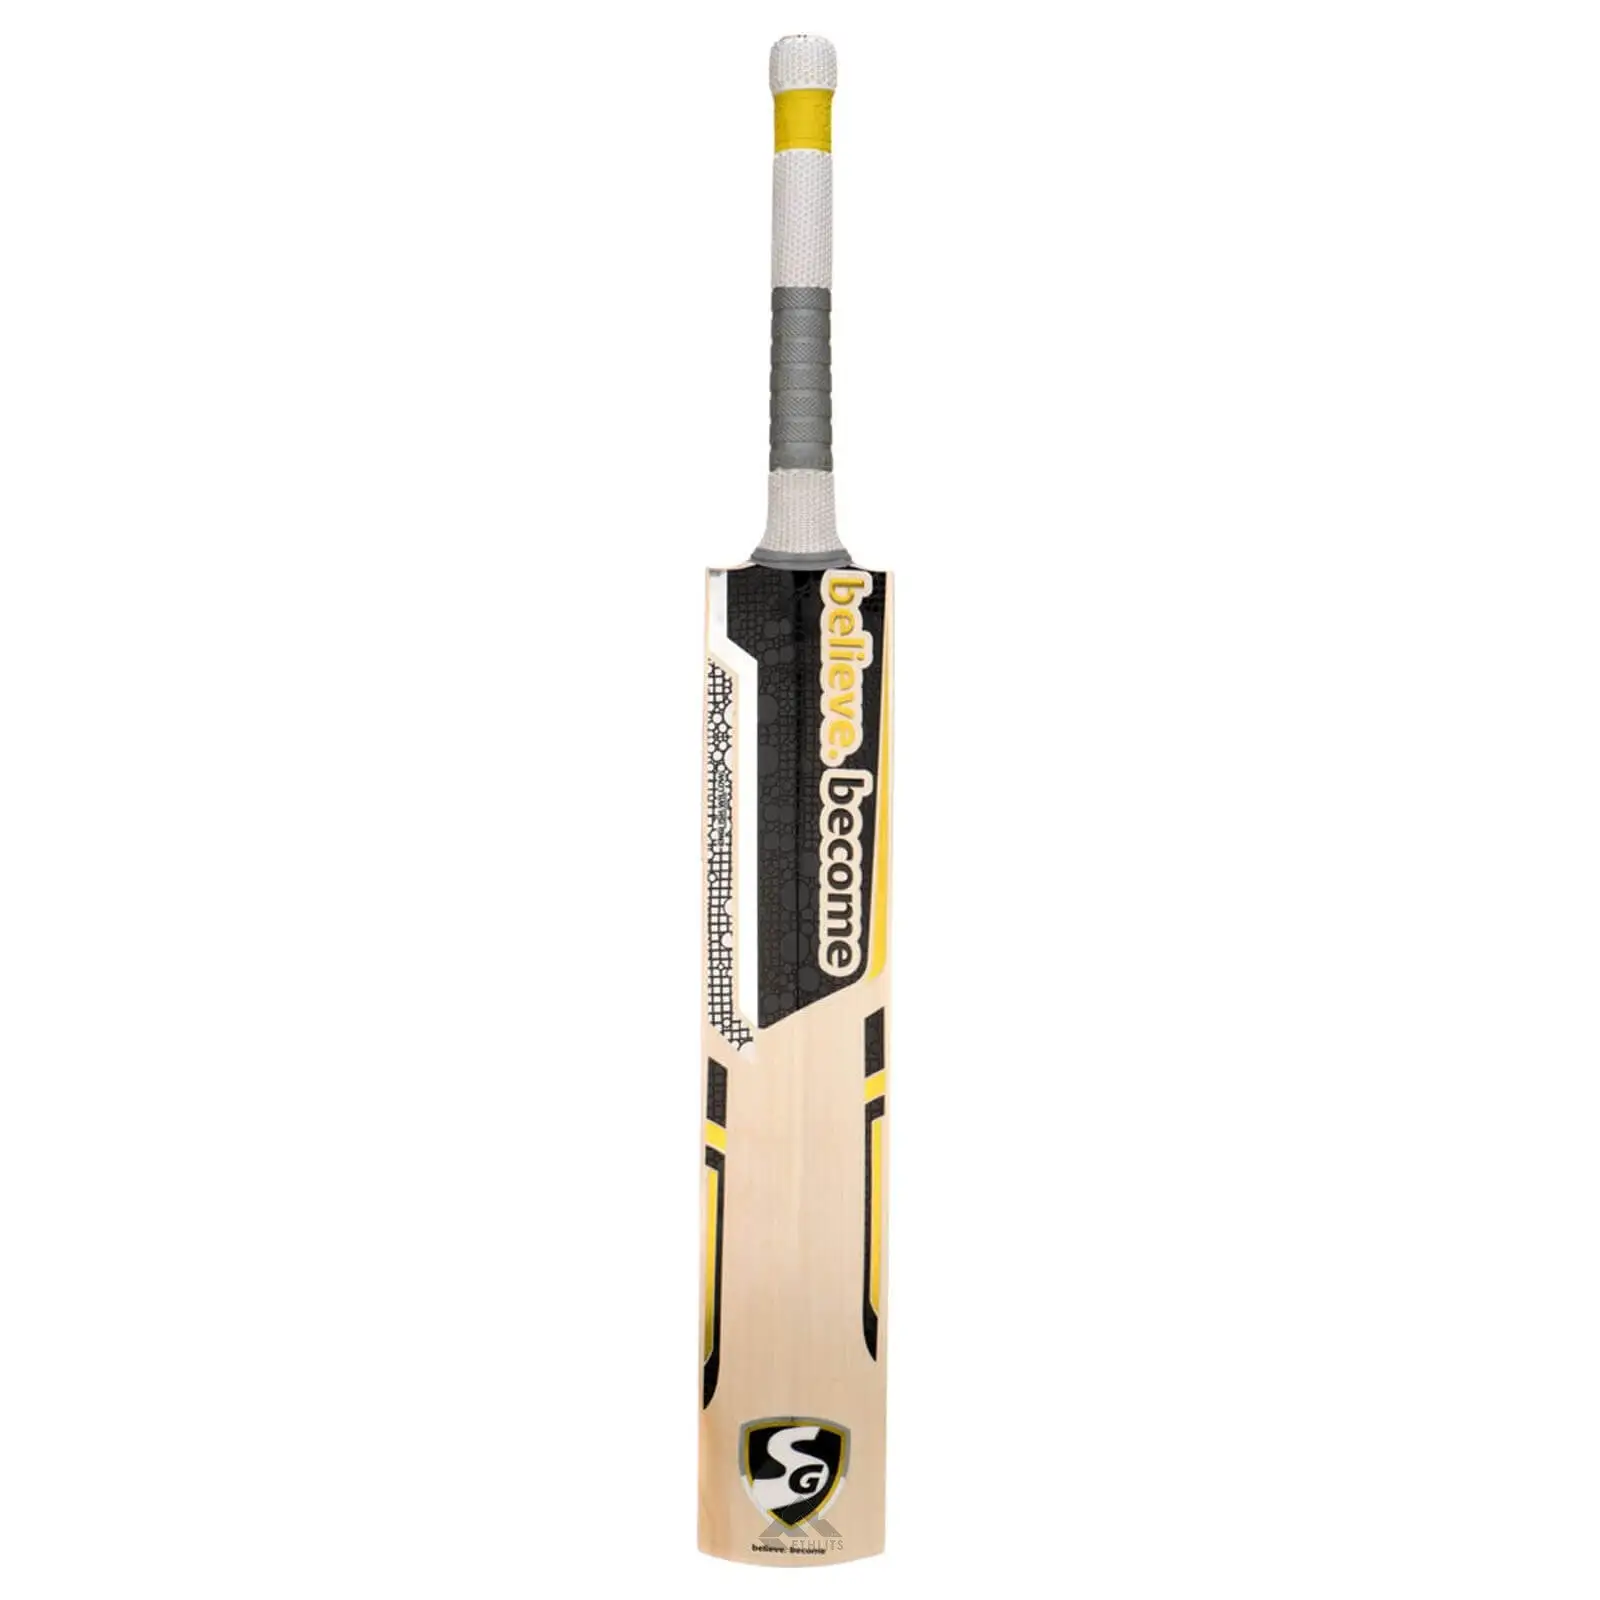 SG King Cobra Cricket Bat English Willow Men - Short Handle (Standard Adult Size Bat) - BATS - MENS ENGLISH WILLOW